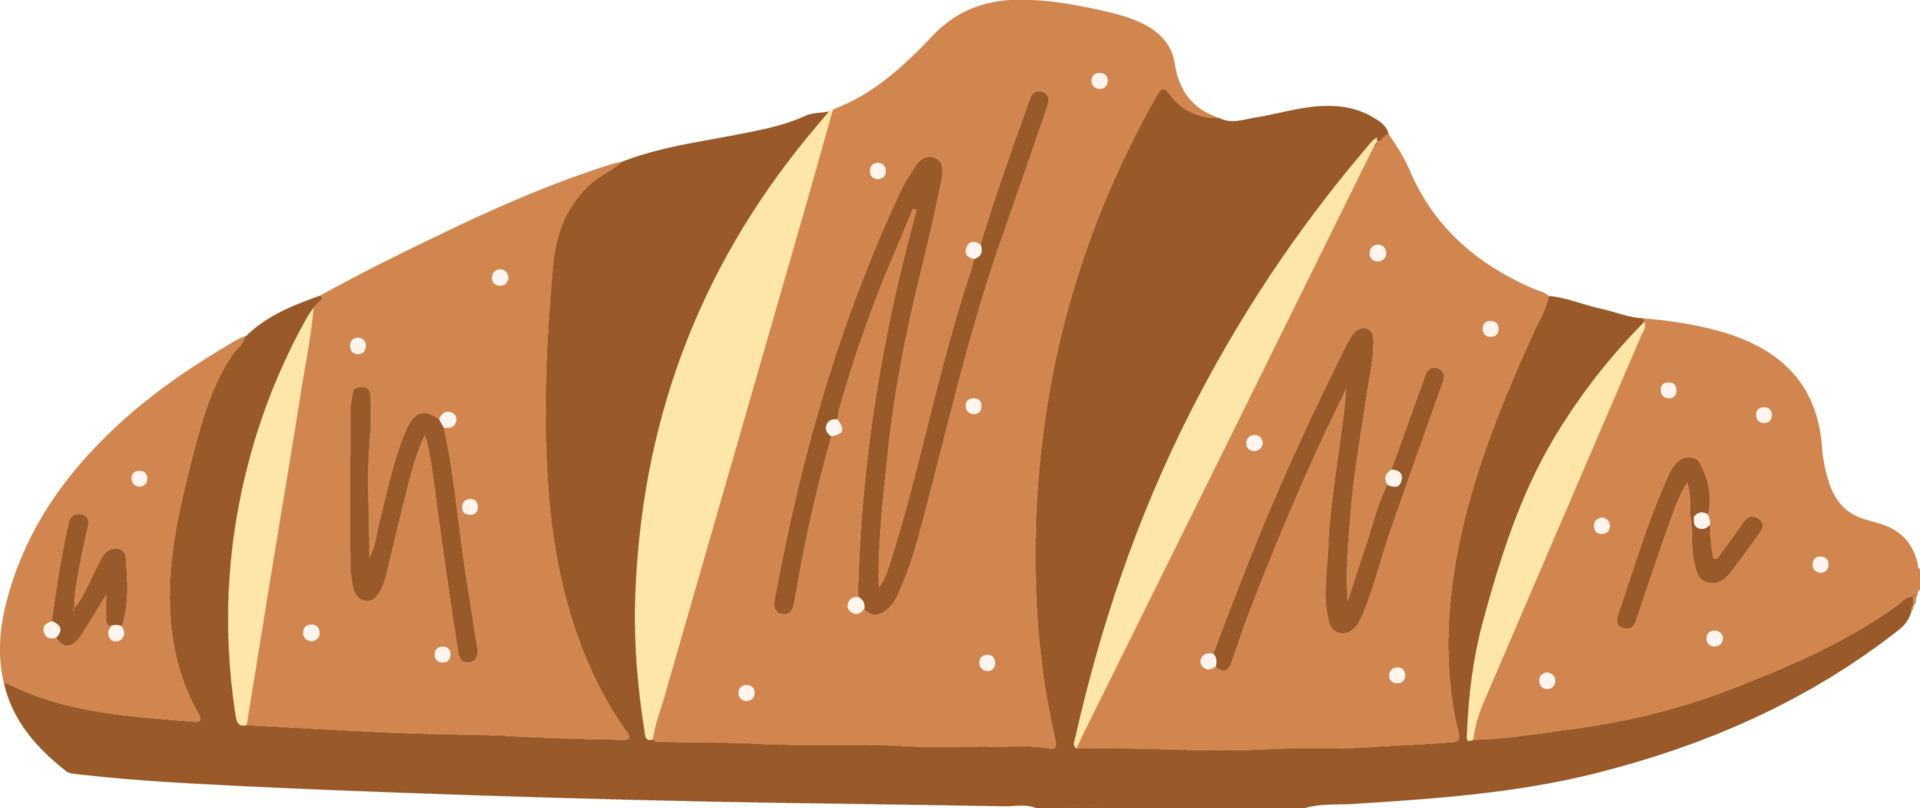 Yummy Choco Croissant Bakery Illustration 12735325 Vector Art at Vecteezy